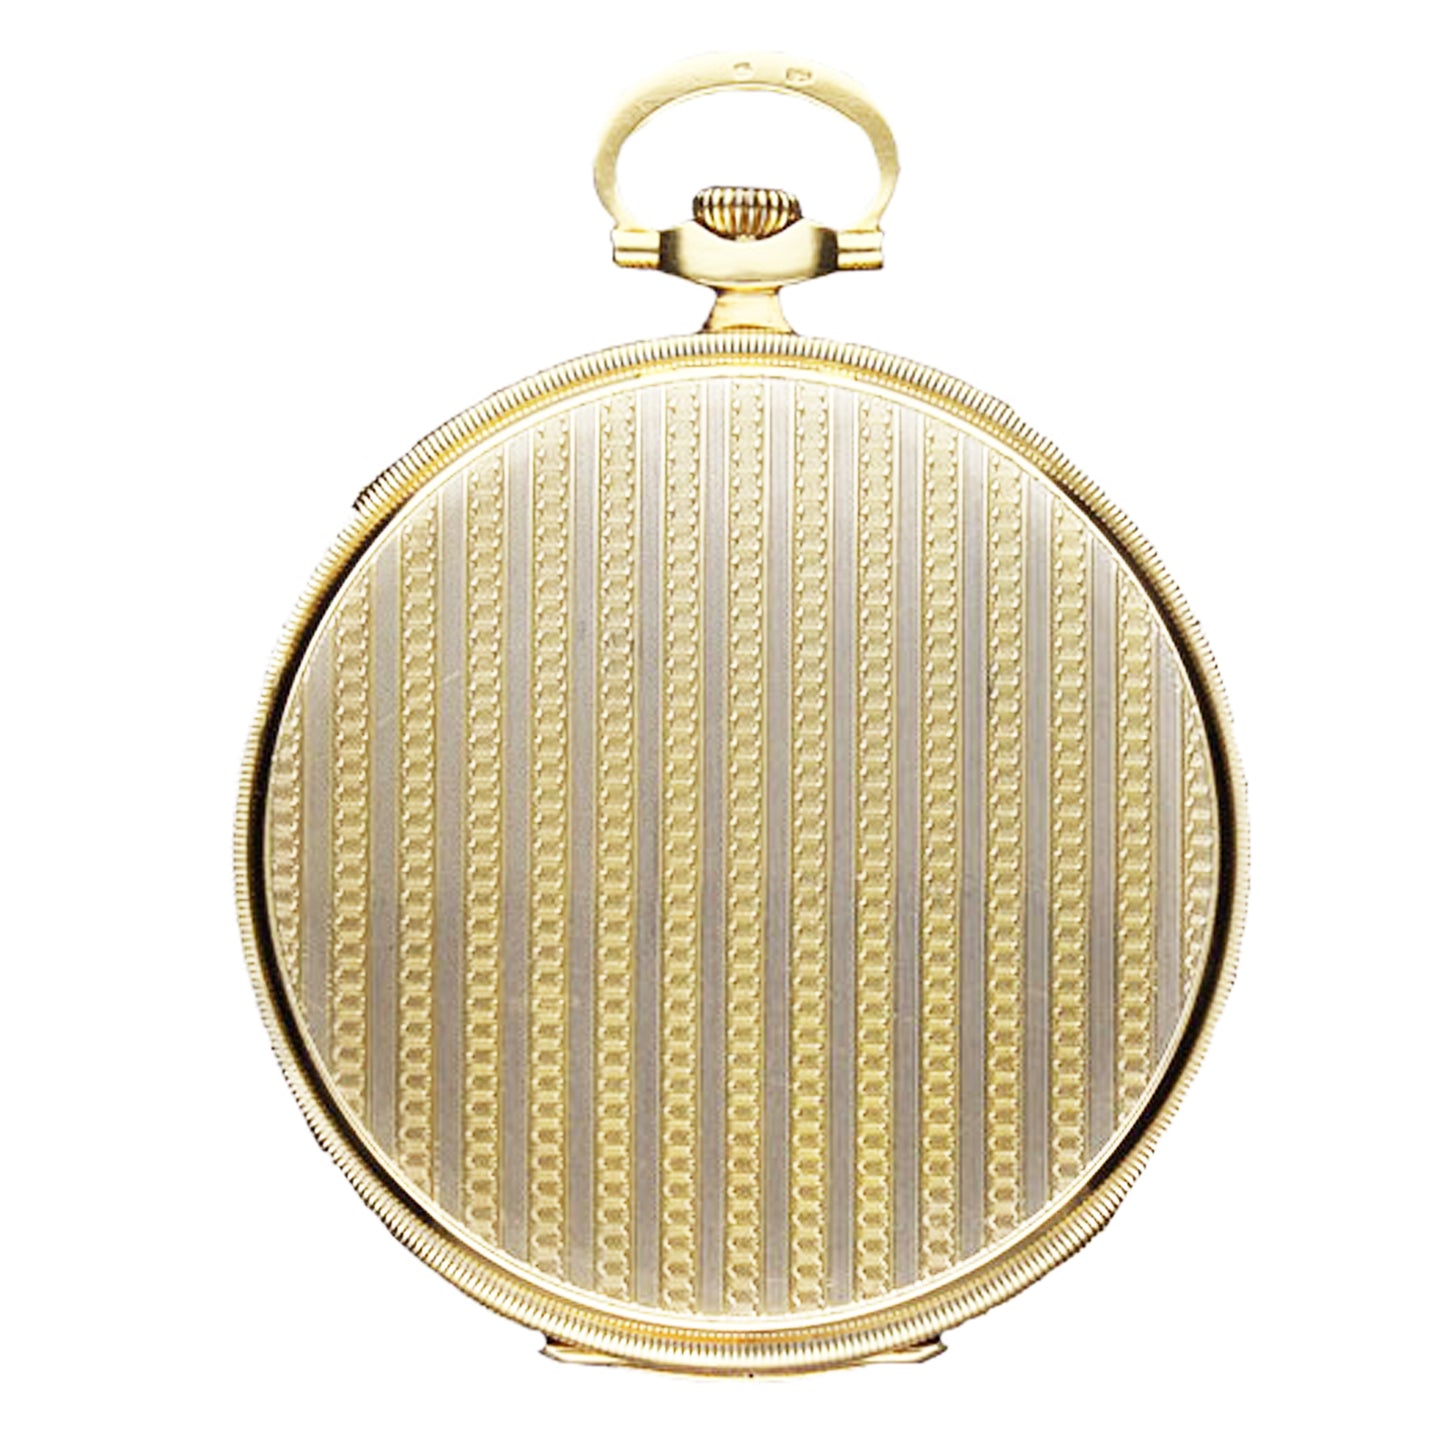 18ct yellow gold open face chronometer pocket watch. Circa 1920